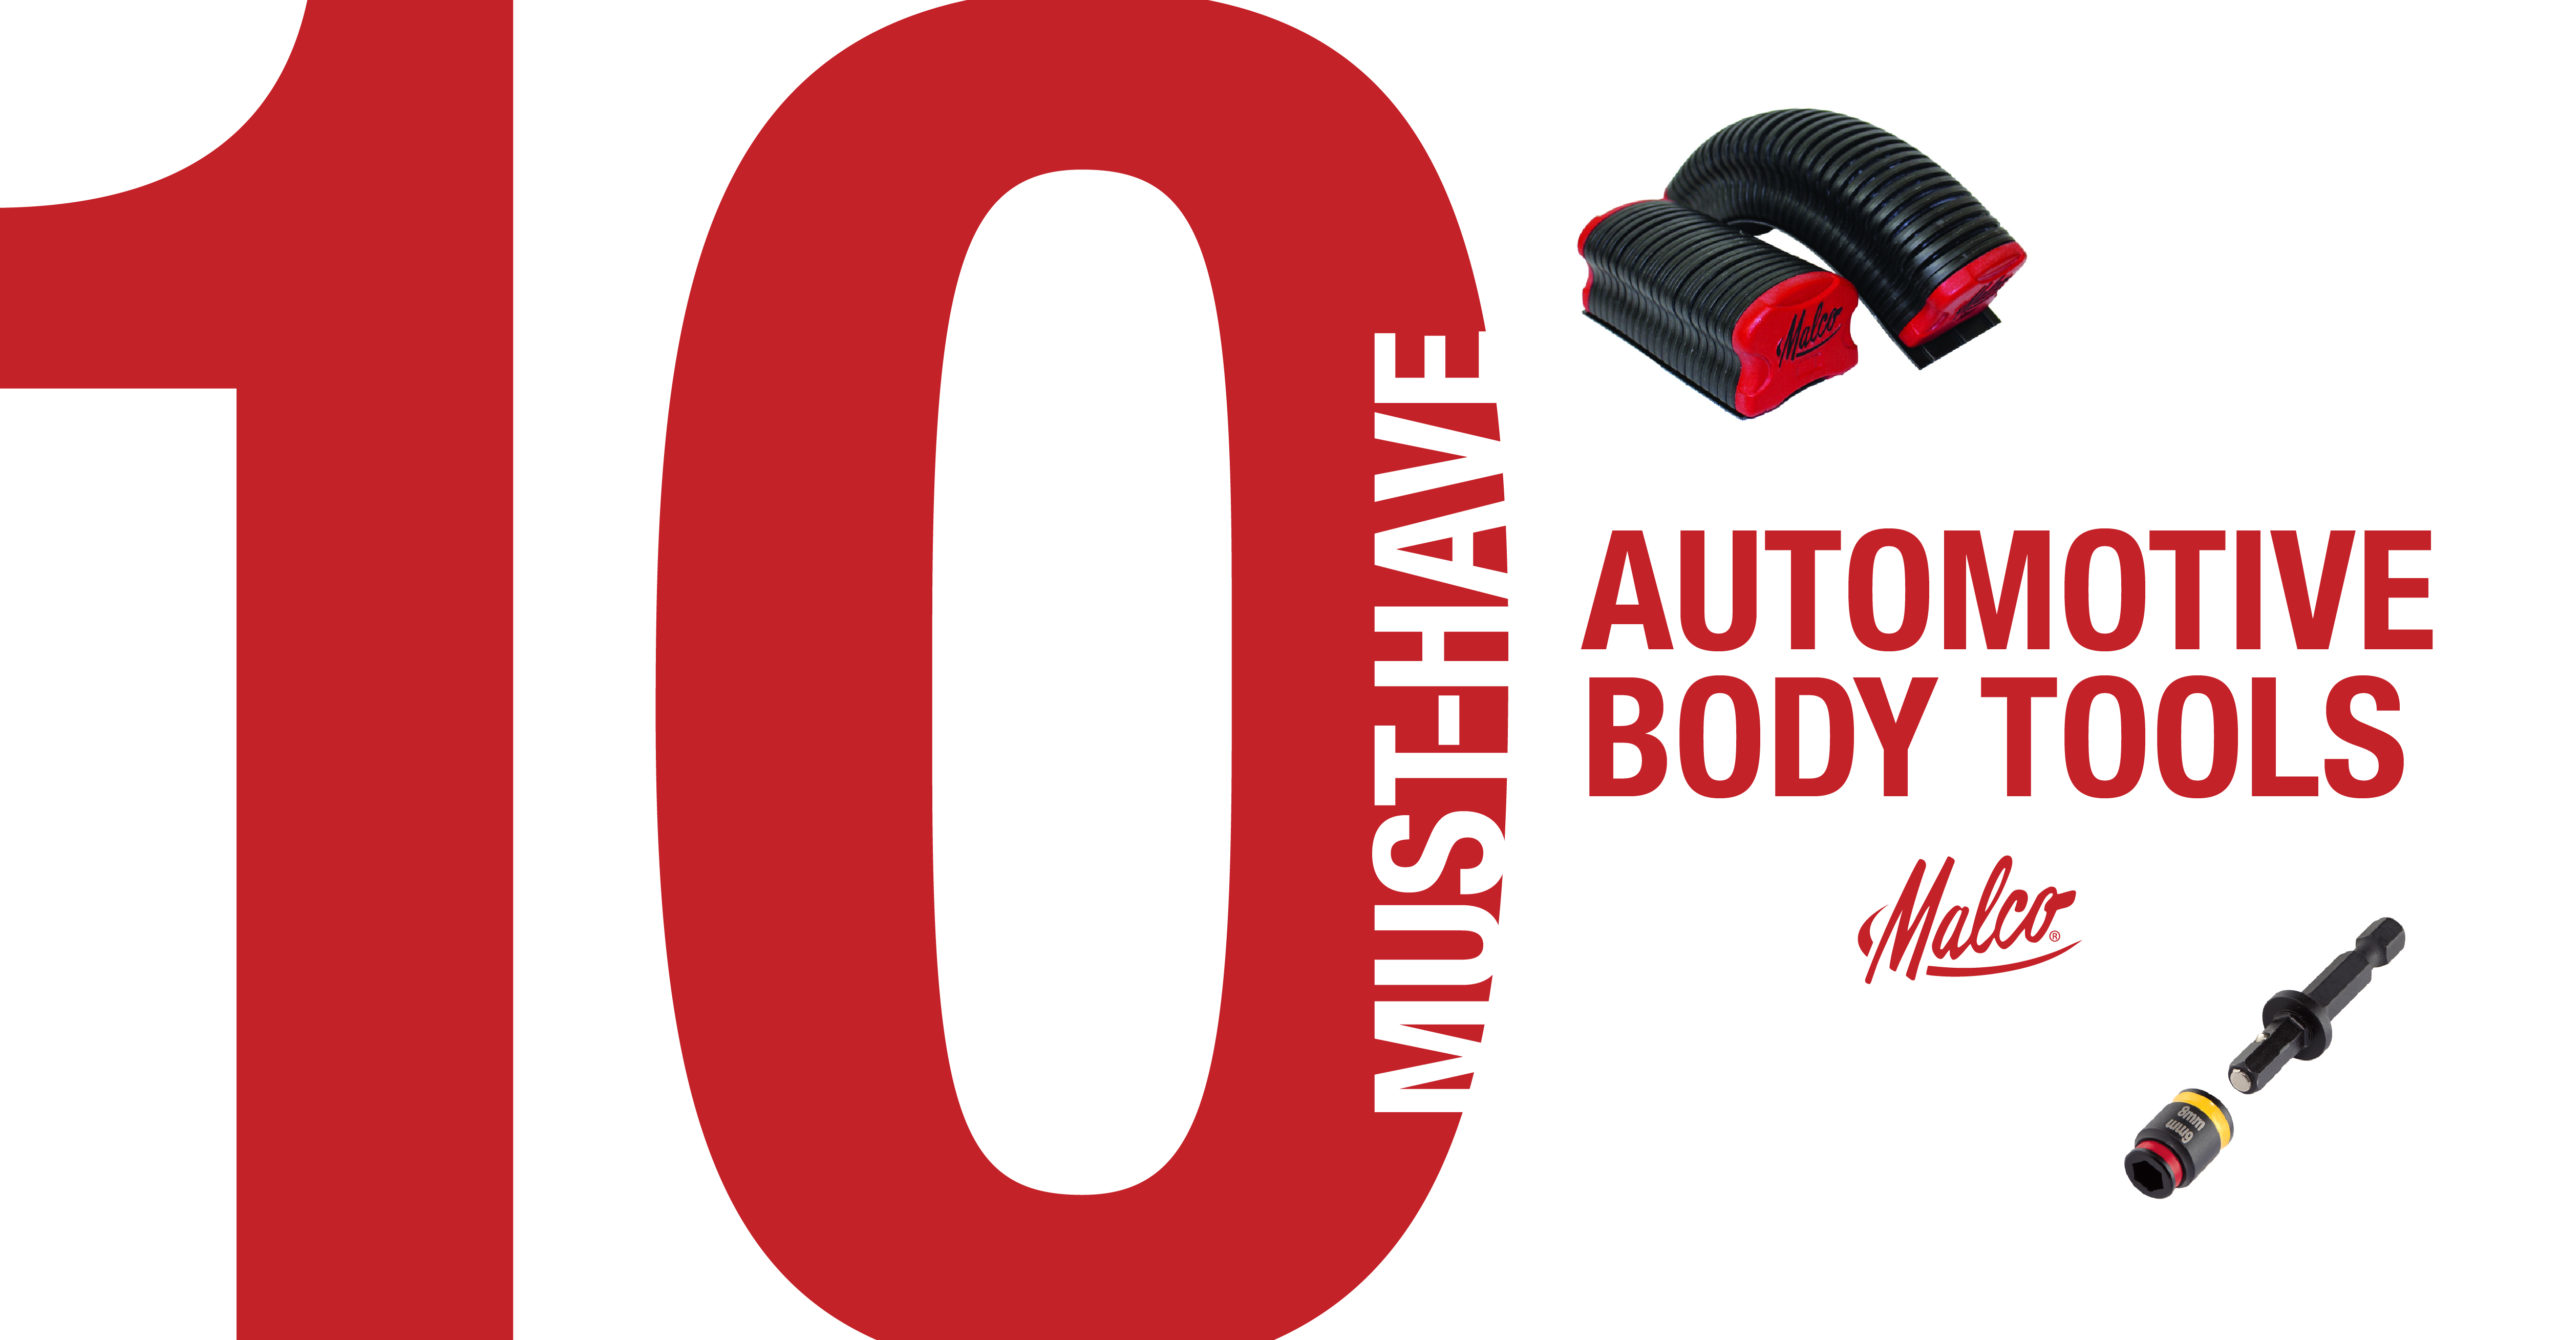 Automotive body tools